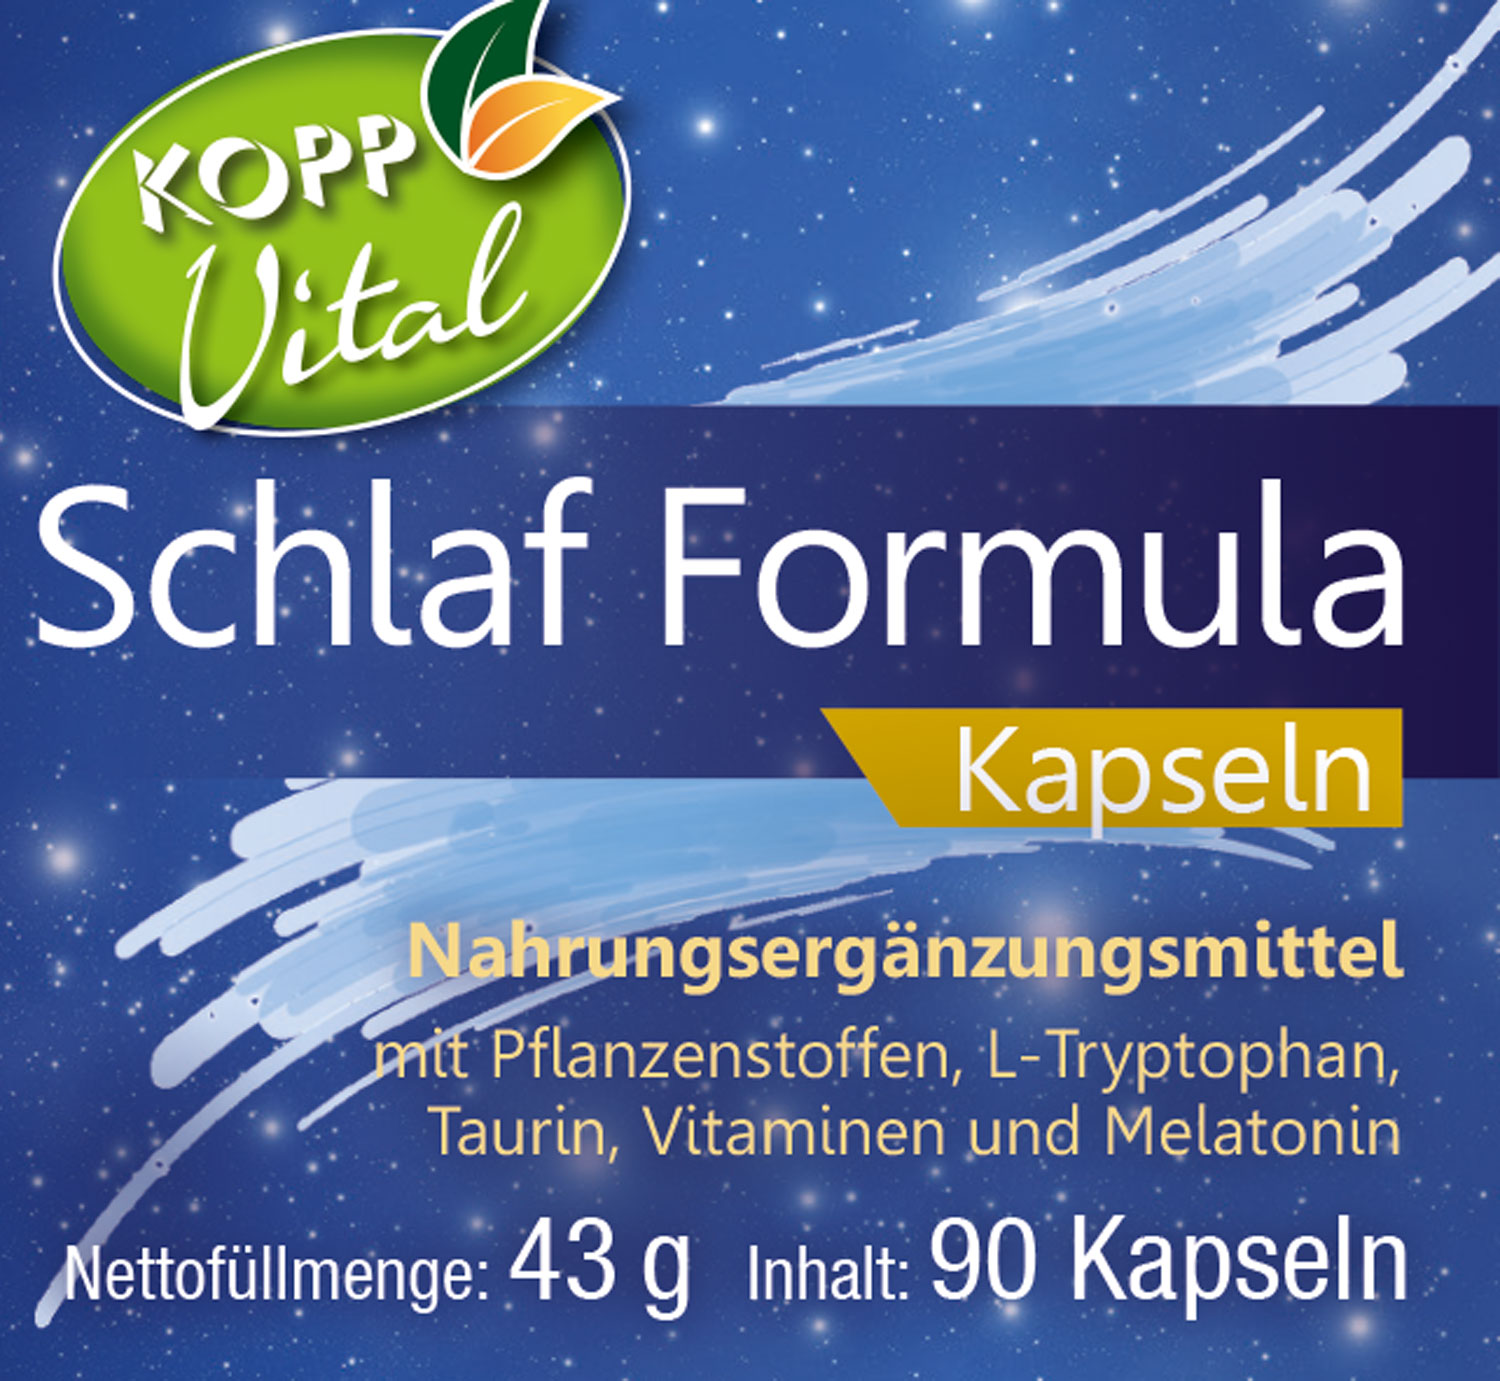 Kopp Vital ® Schlaf Formula Kapseln Kopp Vital Produkte Wohlbefinden Kopp Verlag 9167